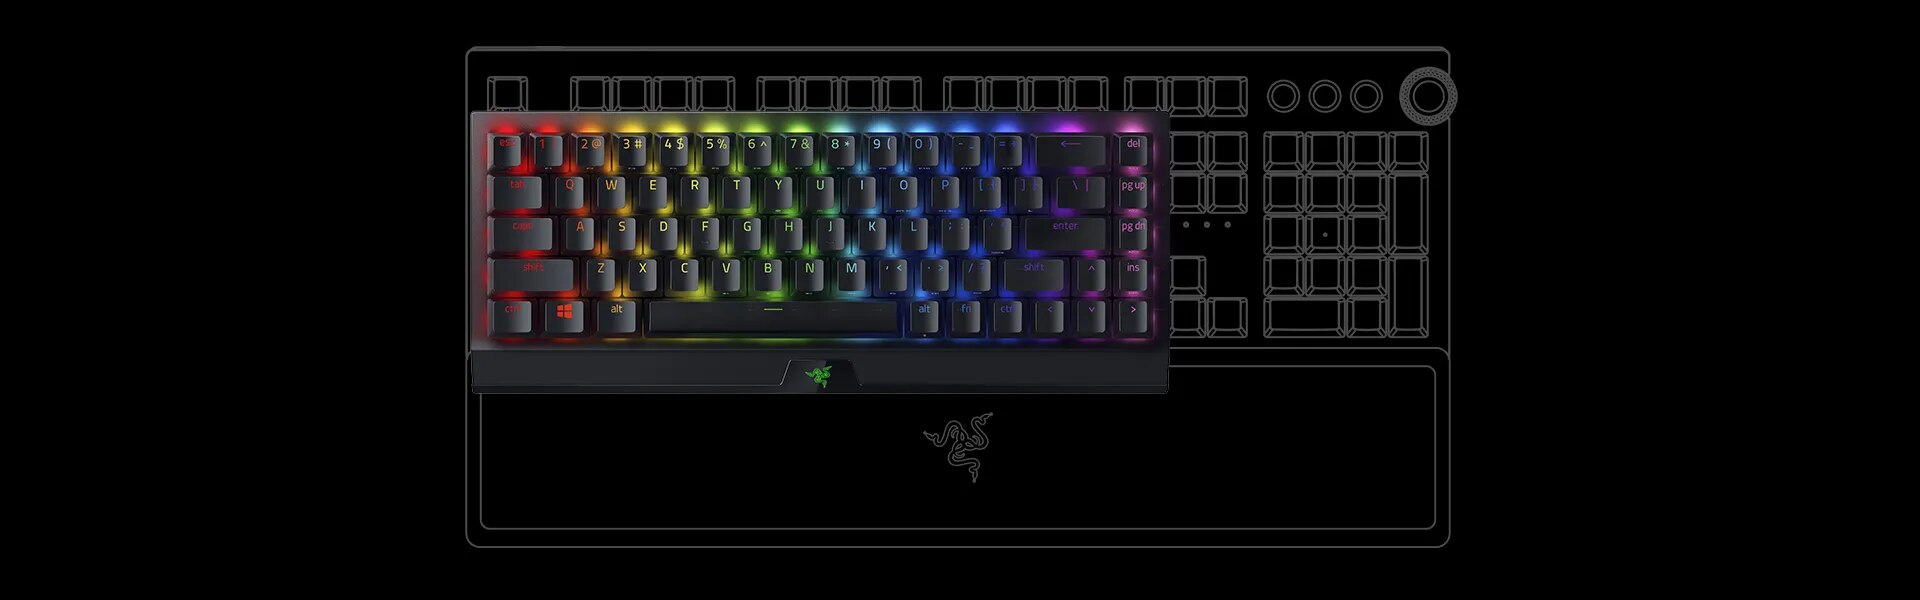 Razer BlackWidow V3 Mini HyperSpeed - Phantom Edition Keyboards